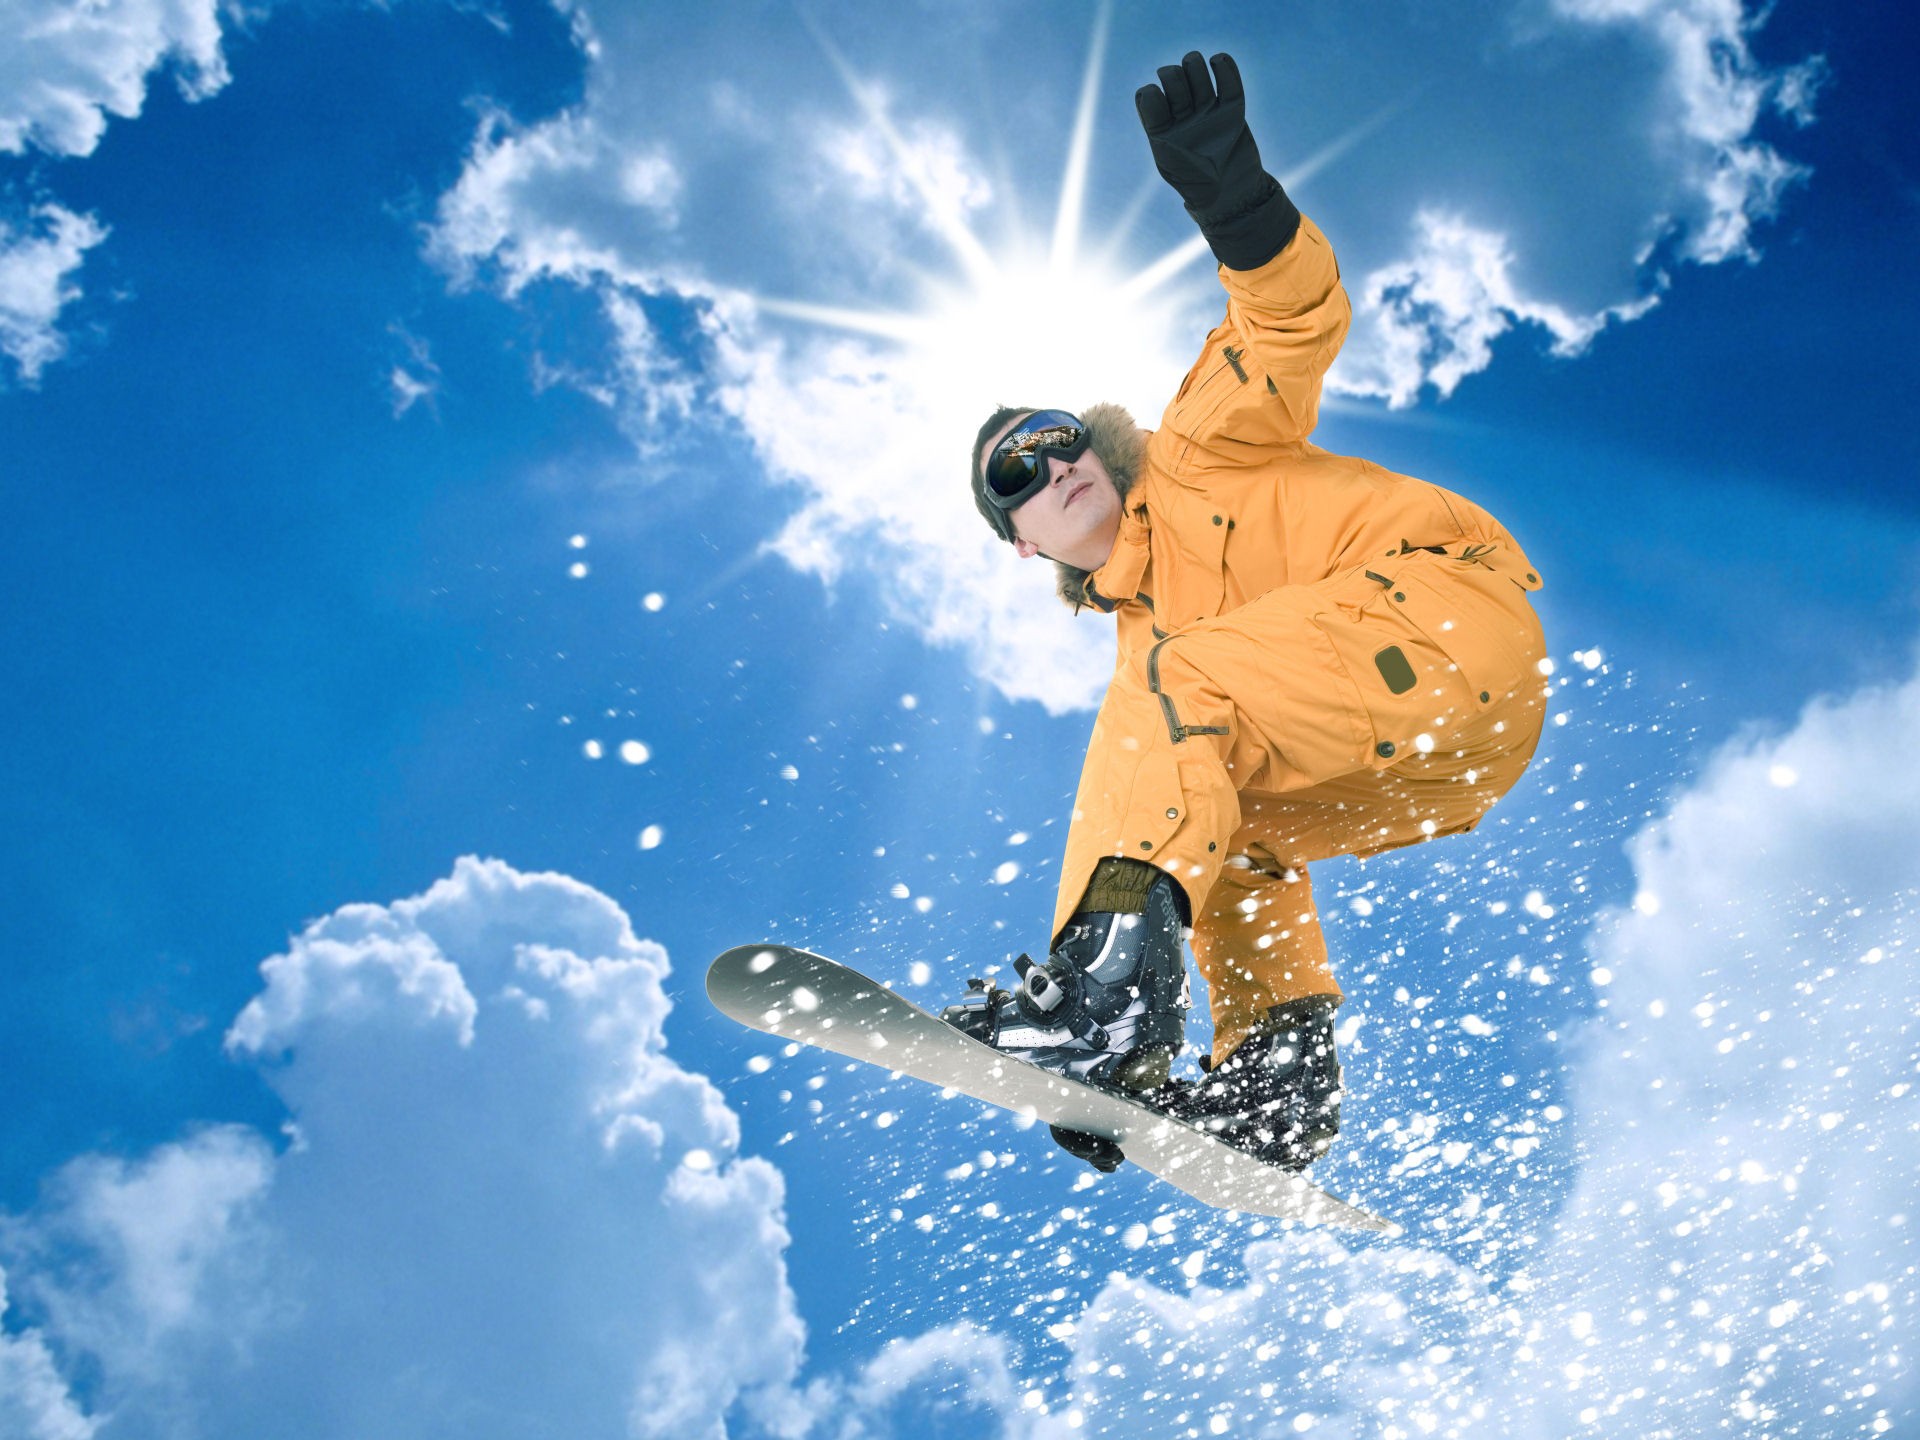 Sports Snowboarding 1920x1440